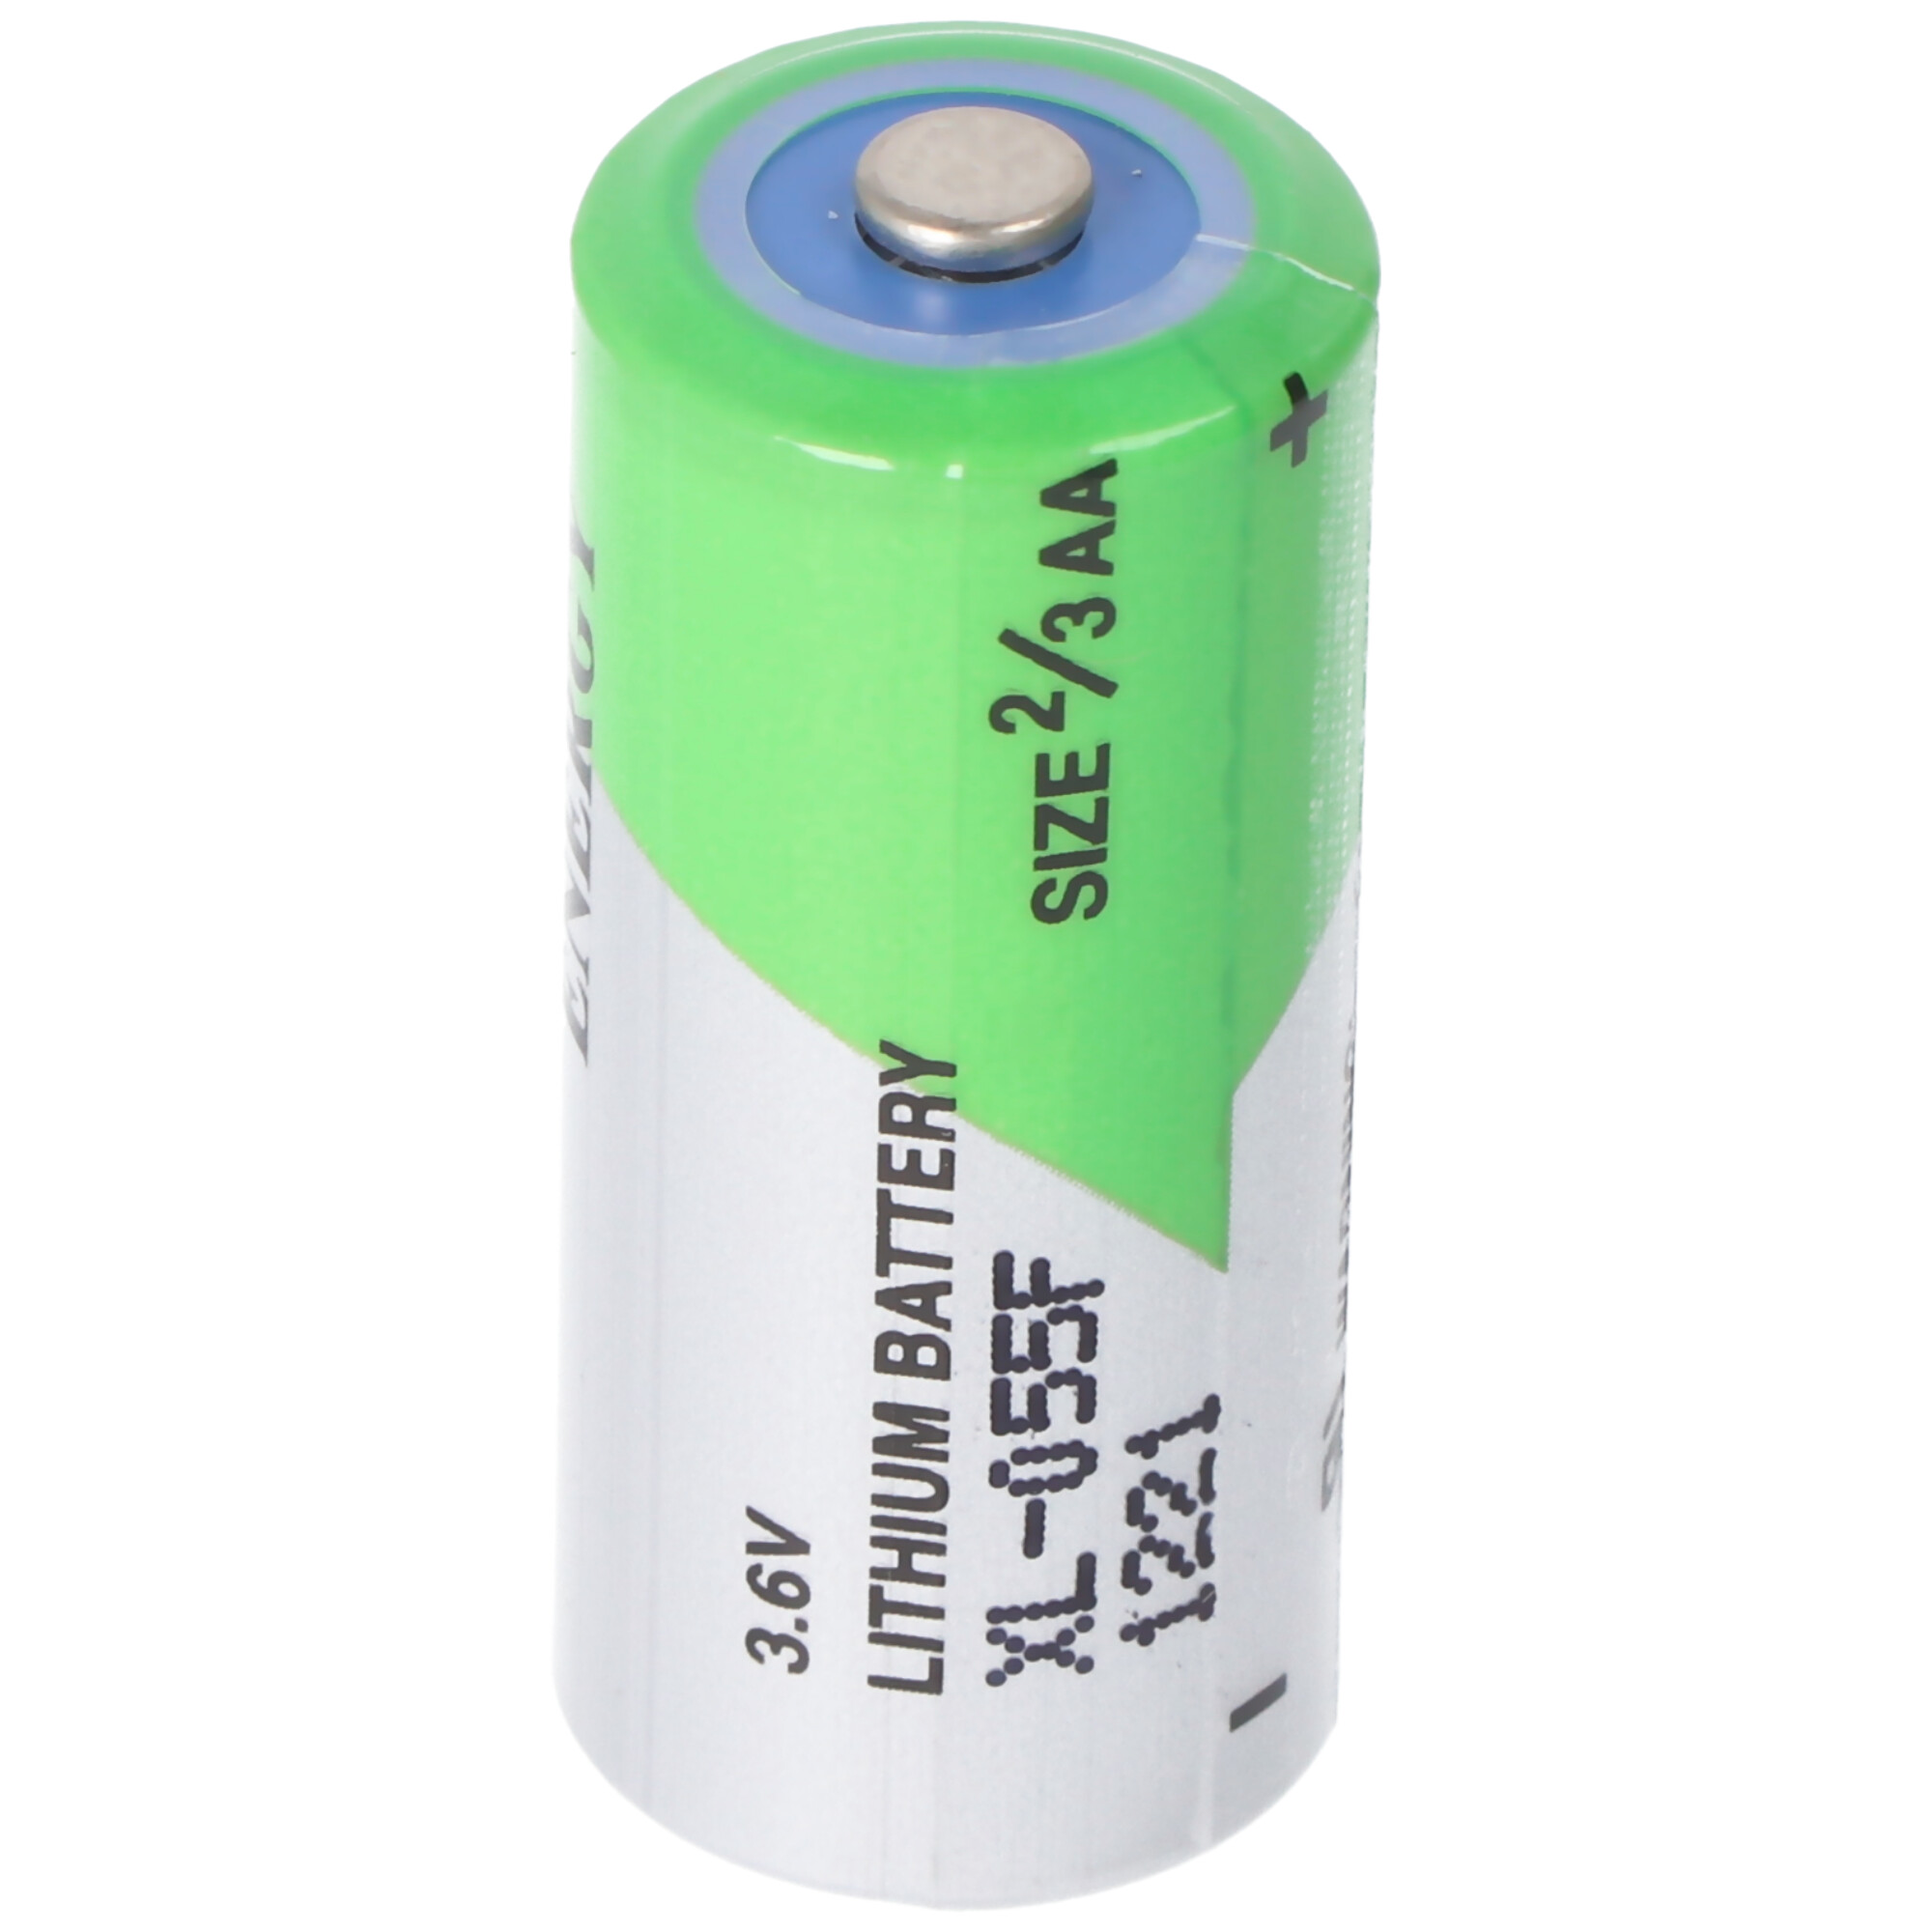 Lithium-Thionylchlorid-Batterie Xeno XL-055 F, 2/3AA 1650mA